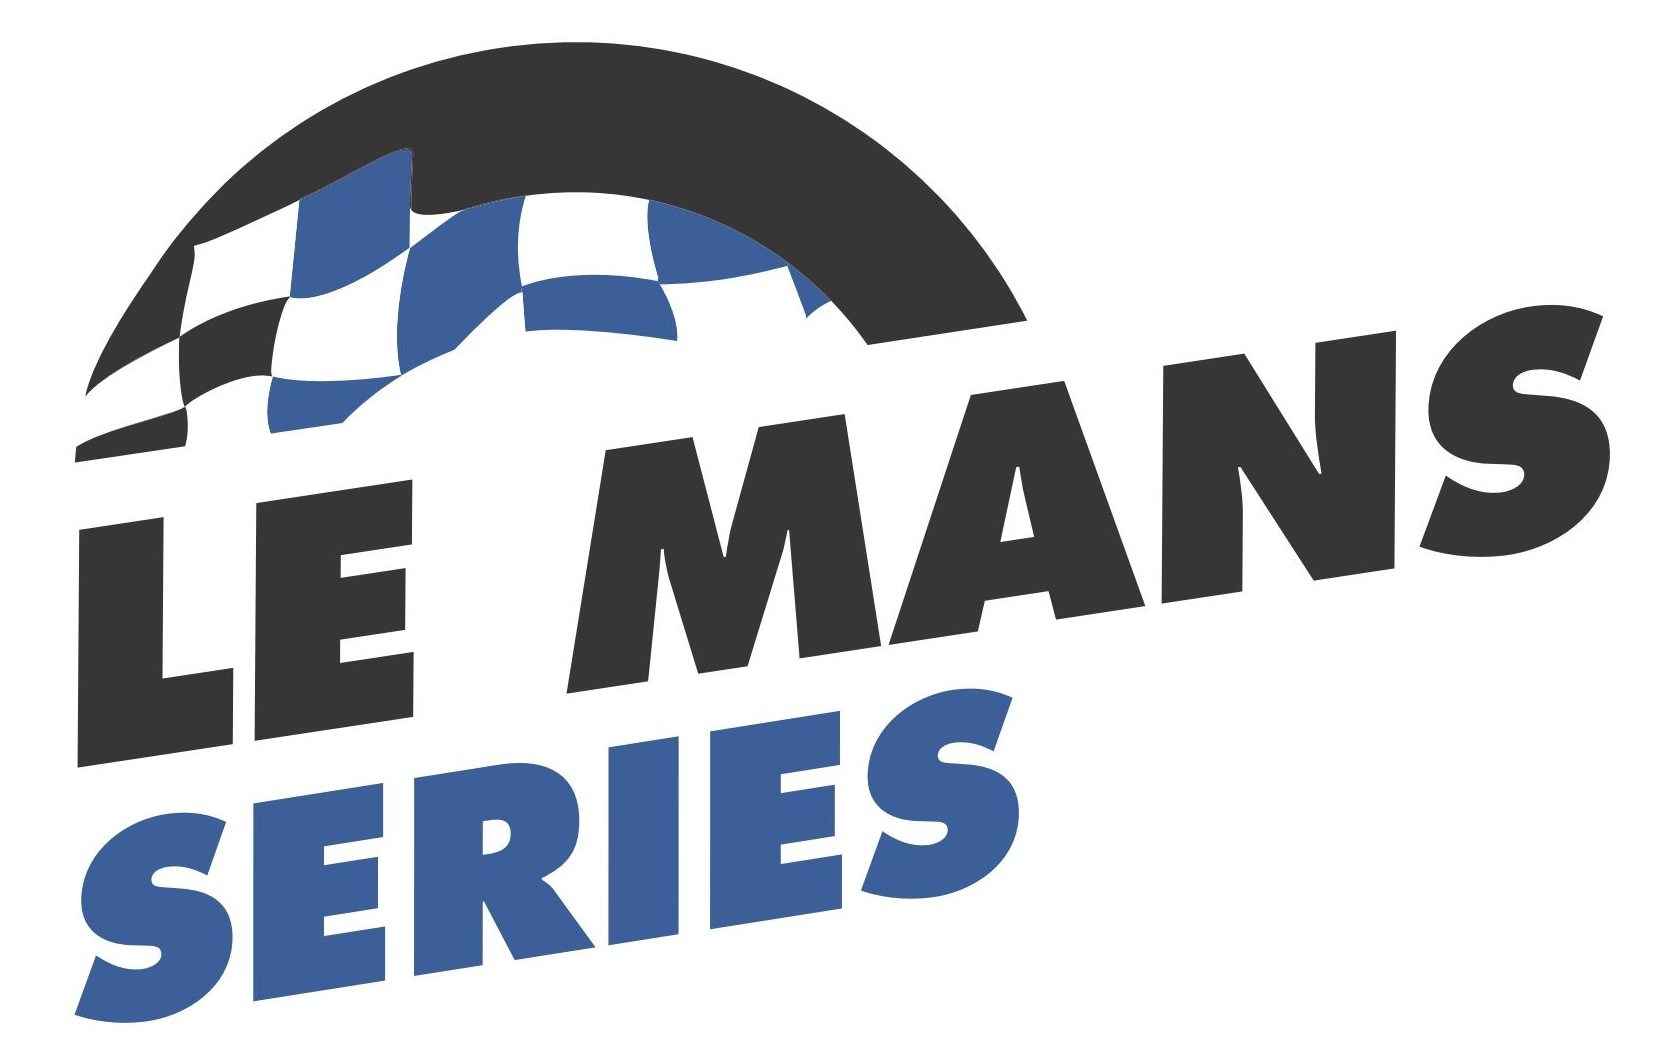 Le Mans Series Logo [EPS File]